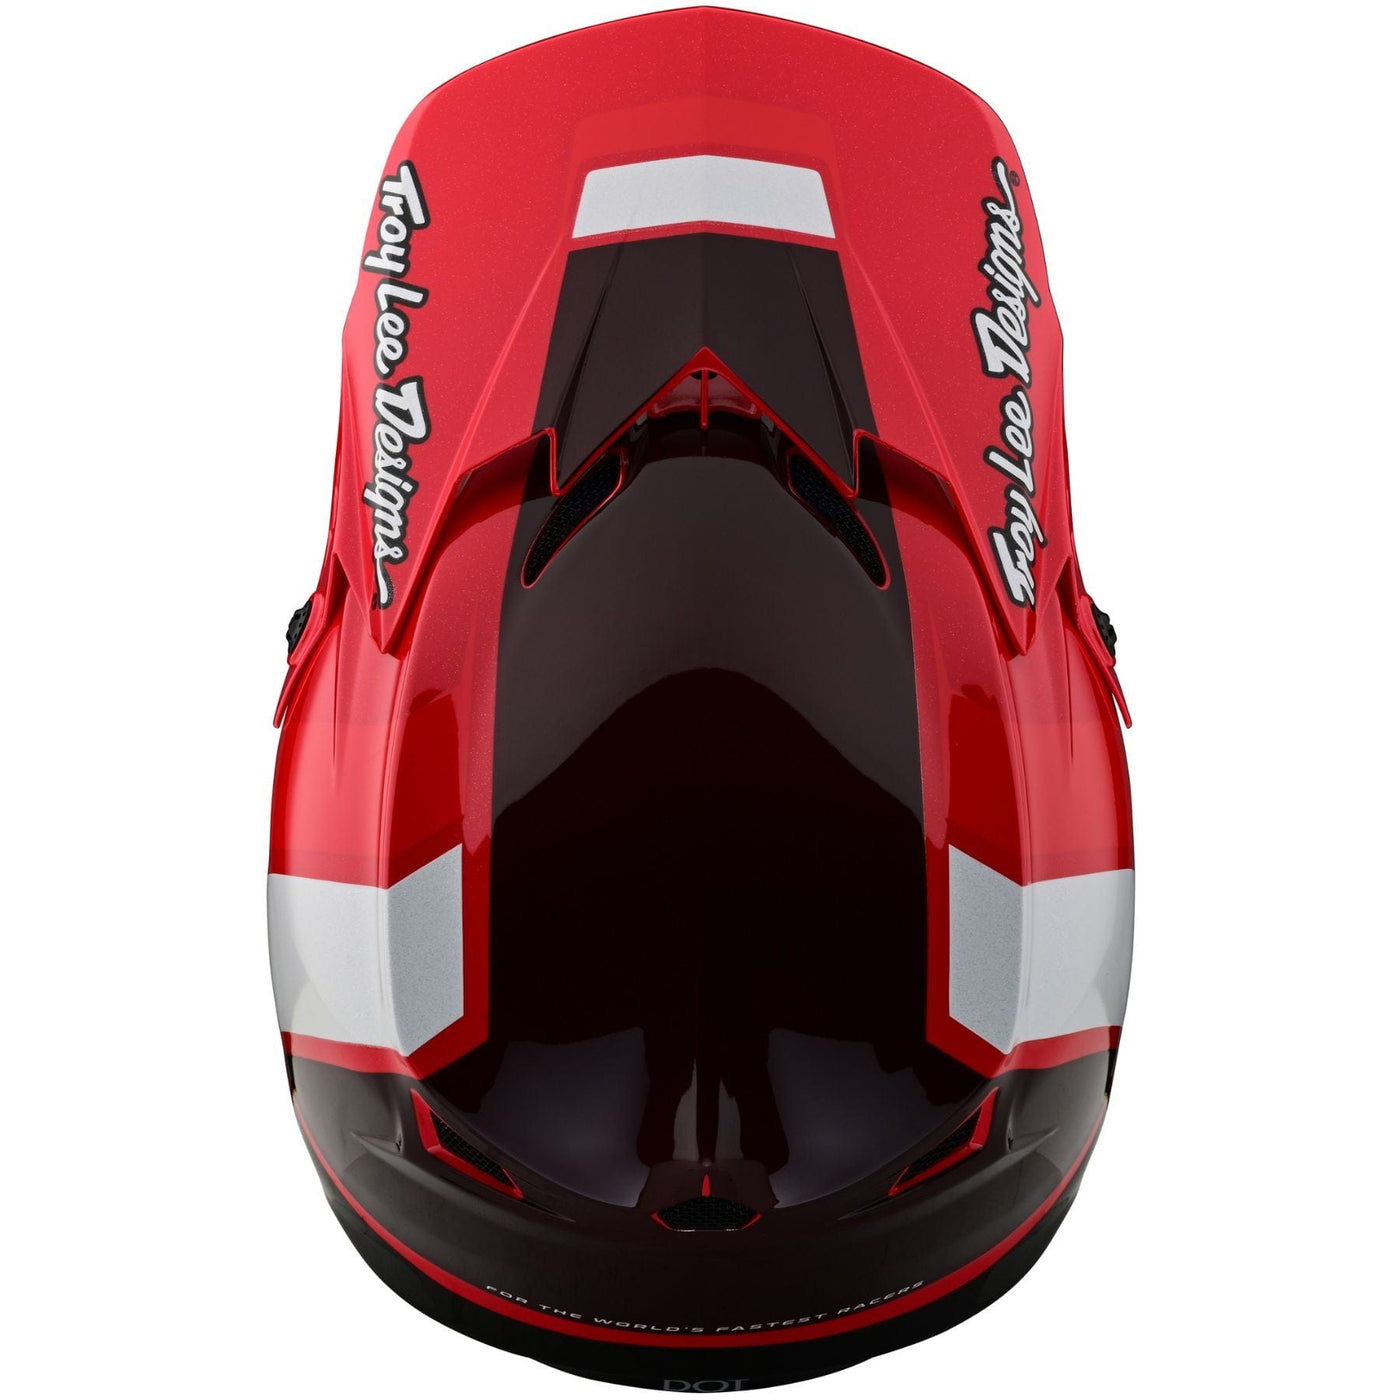 Troy Lee Designs GP Mono Motocross Helmet - Red 8Lines Shop - Fast Shipping